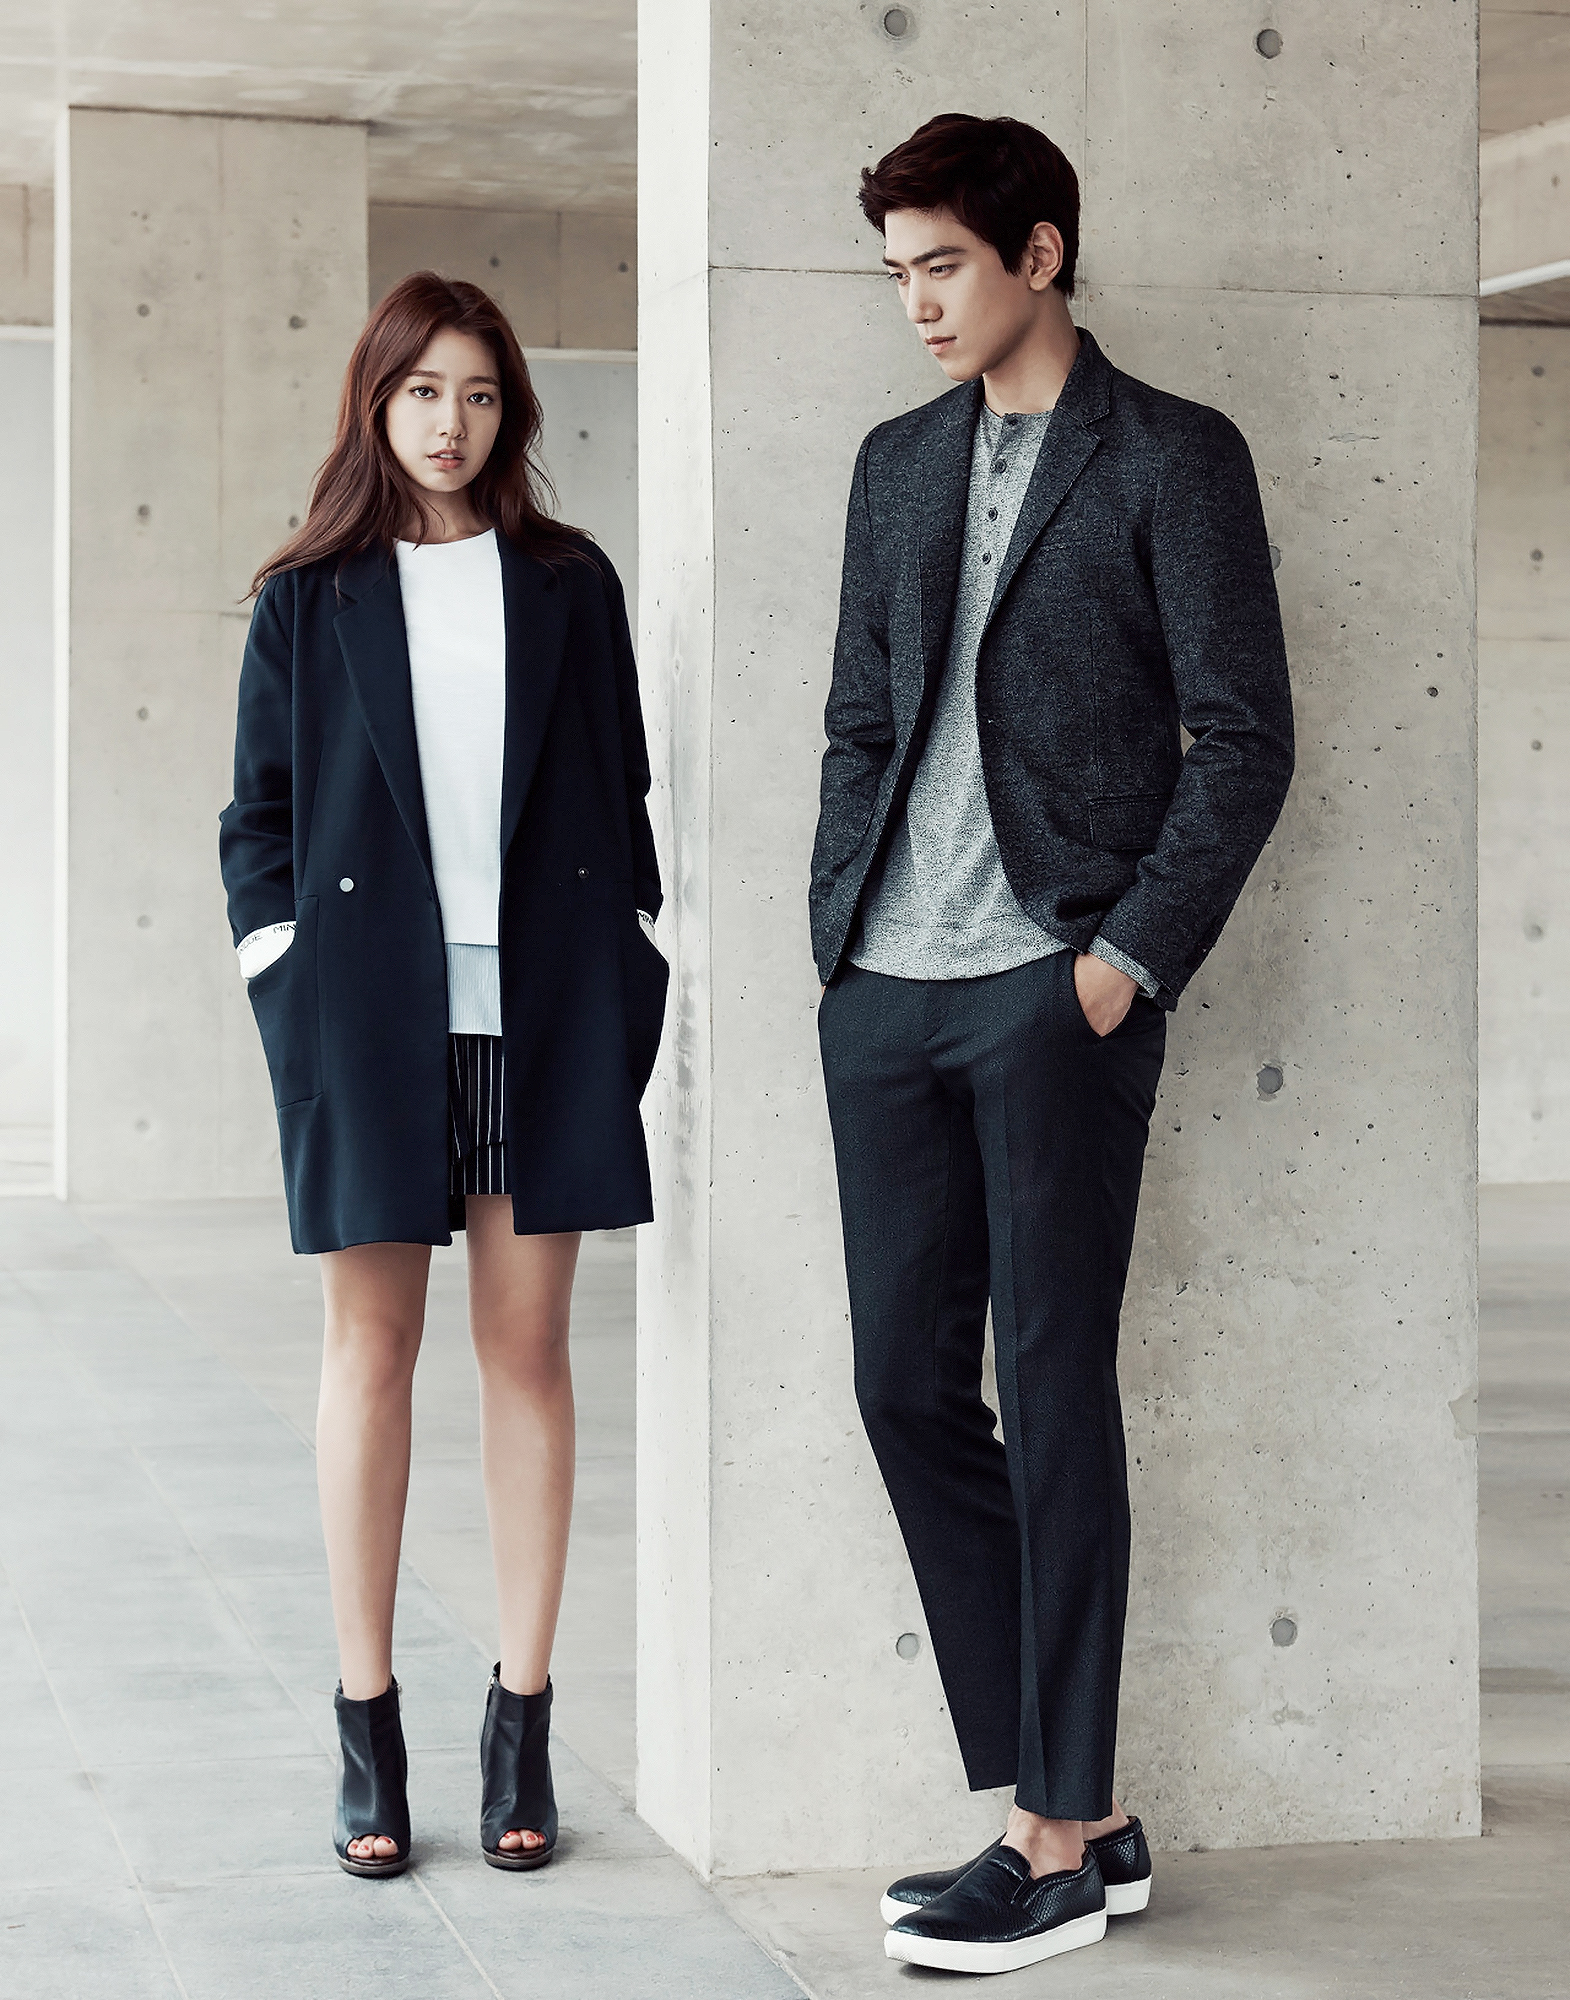 [HQ] Park Shin Hye and Sung Joon for Mind Bridge Fall 2015